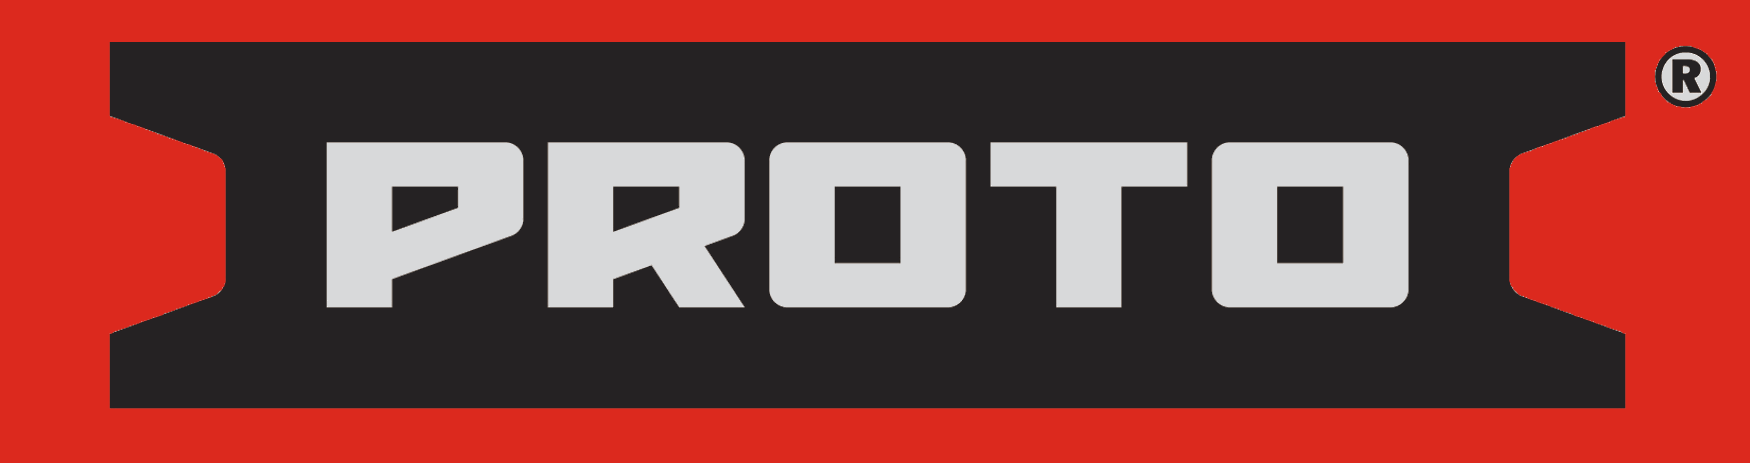 Proto_logo_red_bg-1362750253